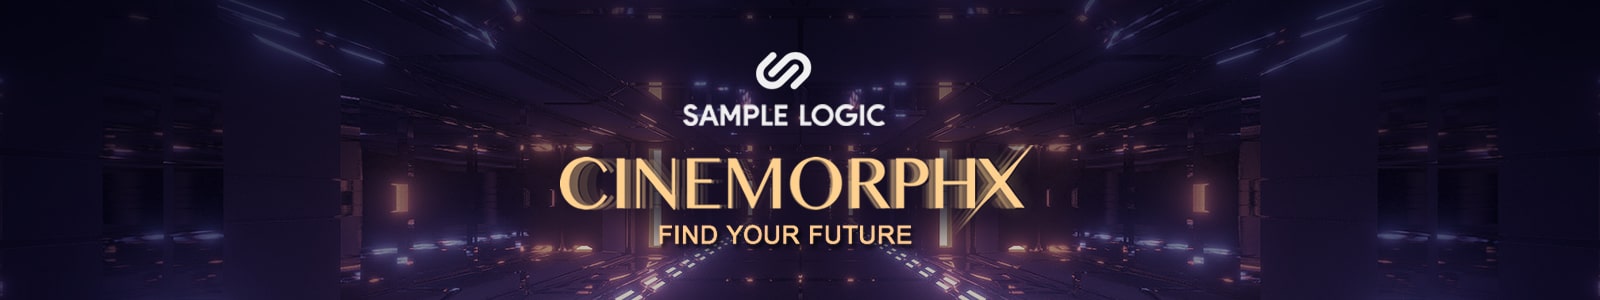 cinemorphx by sample logic